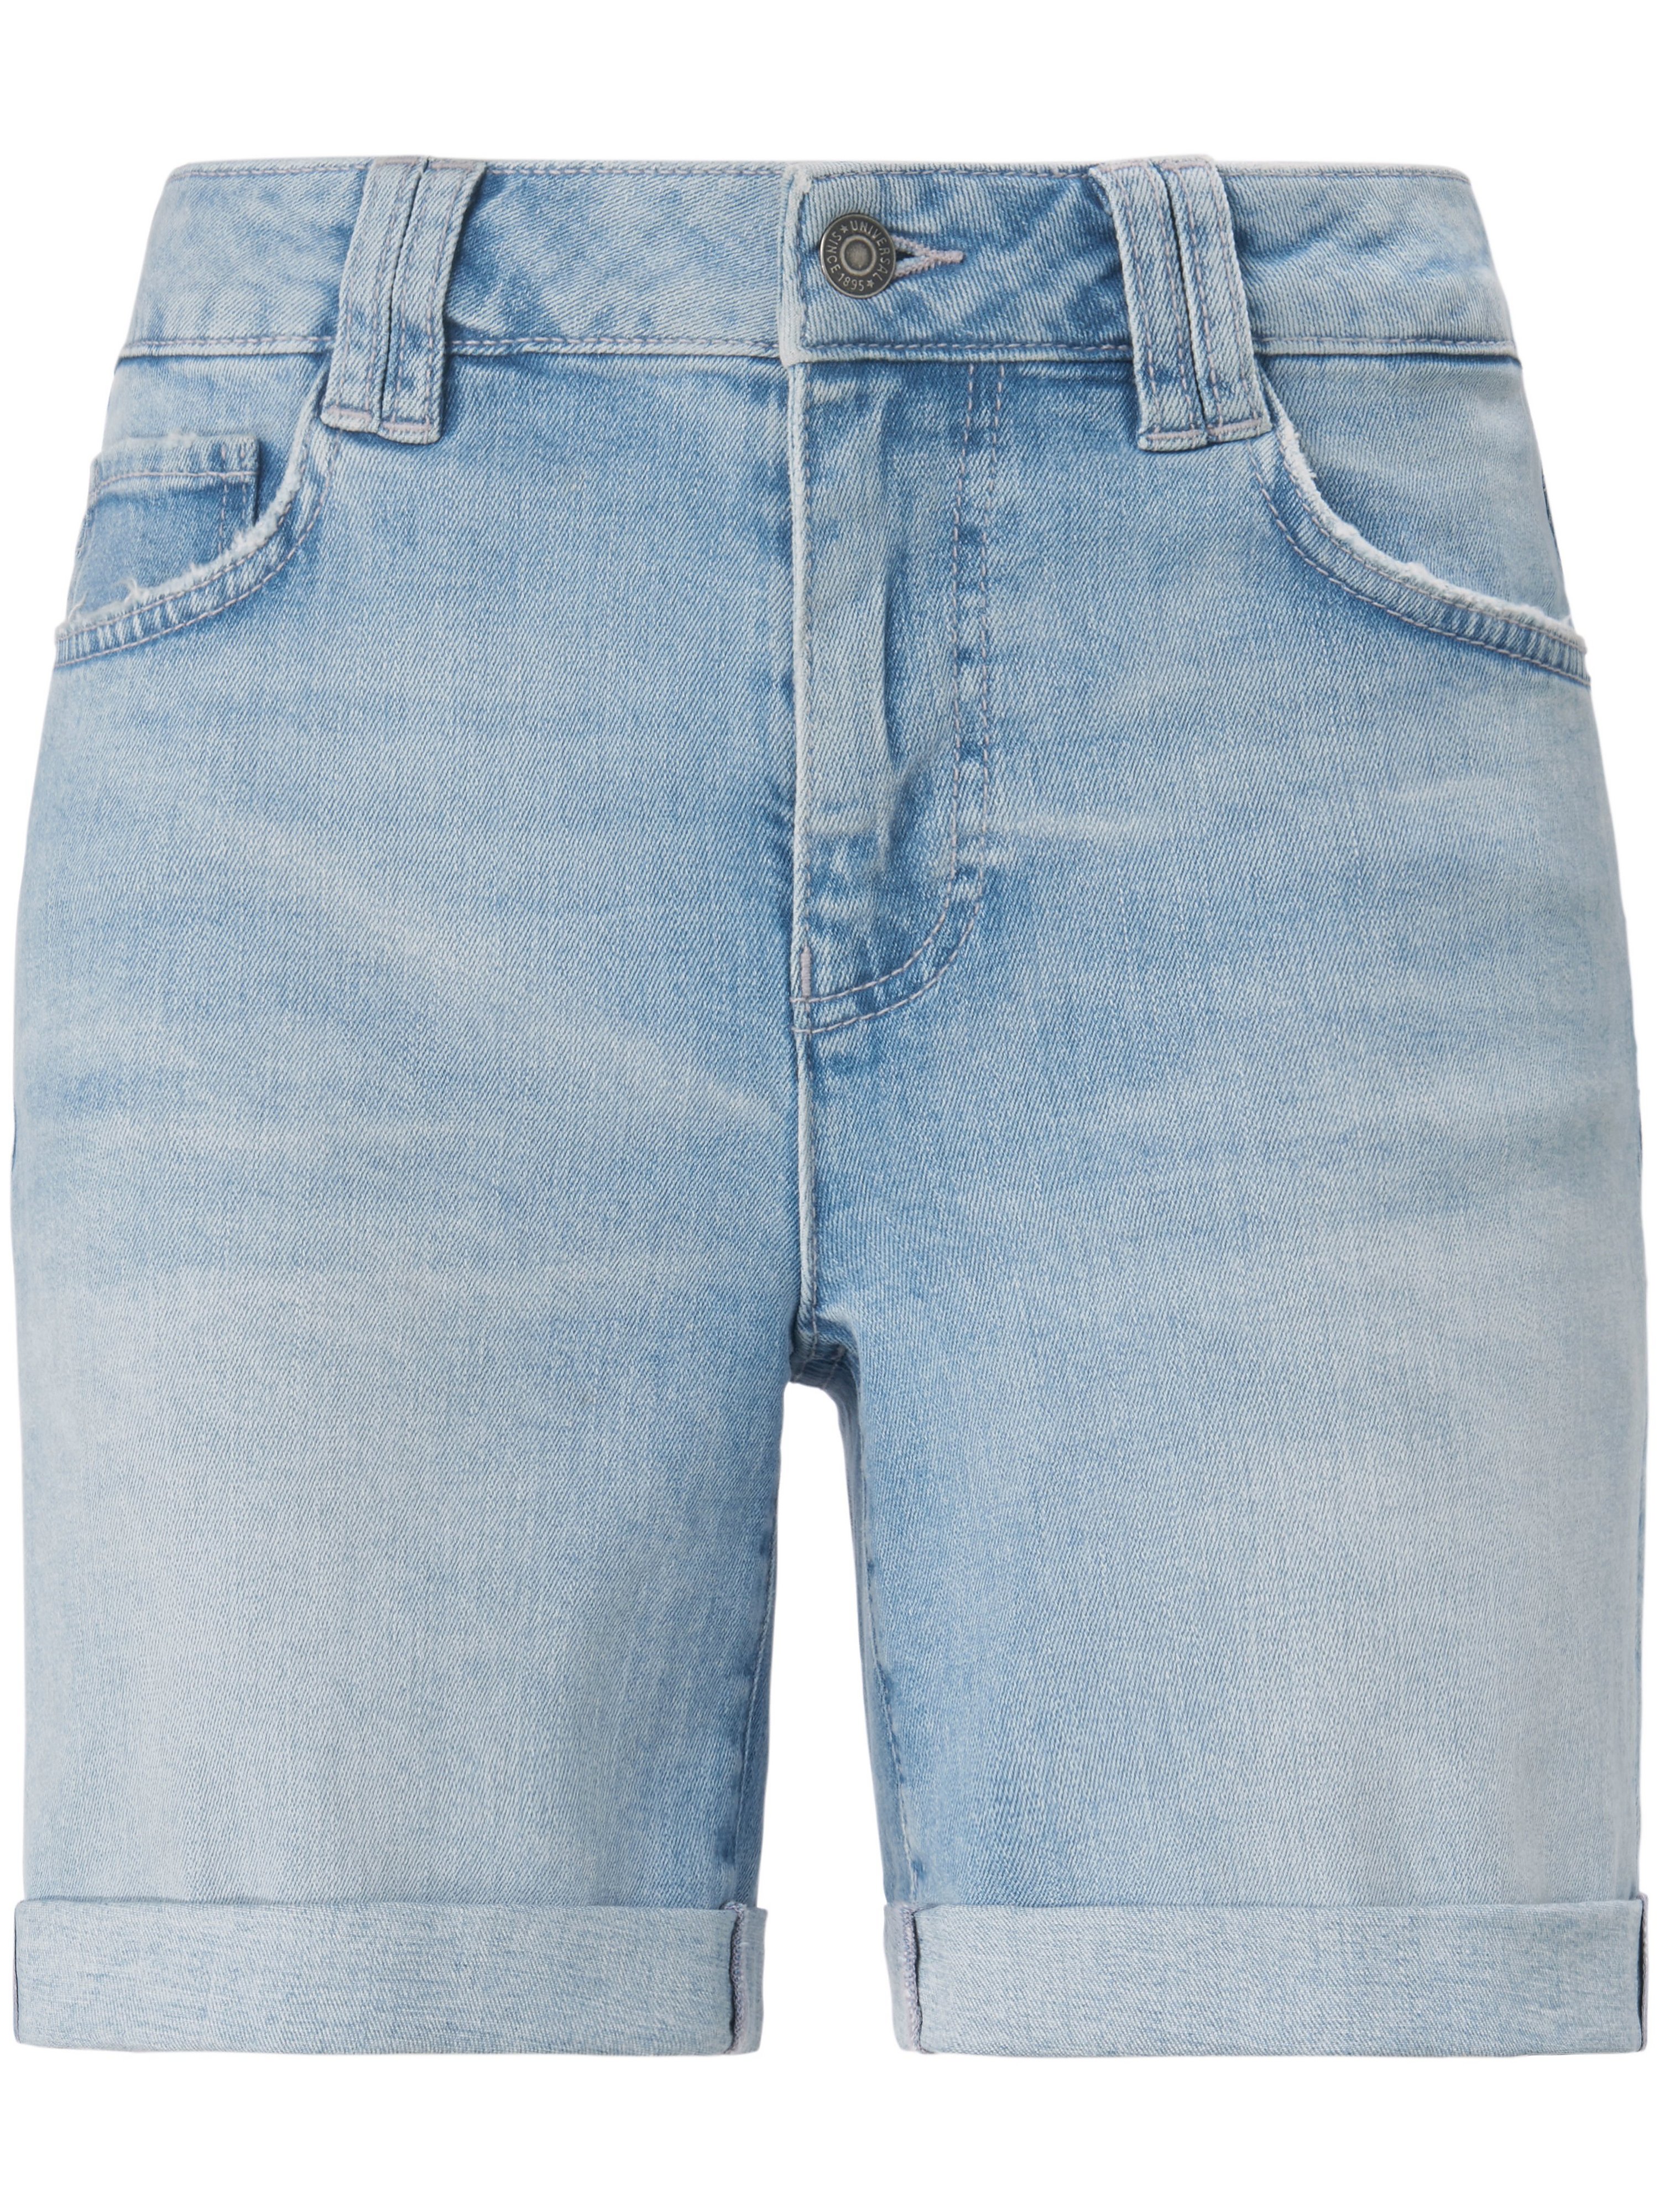 Le short en jean coupe 5 poches  DAY.LIKE denim